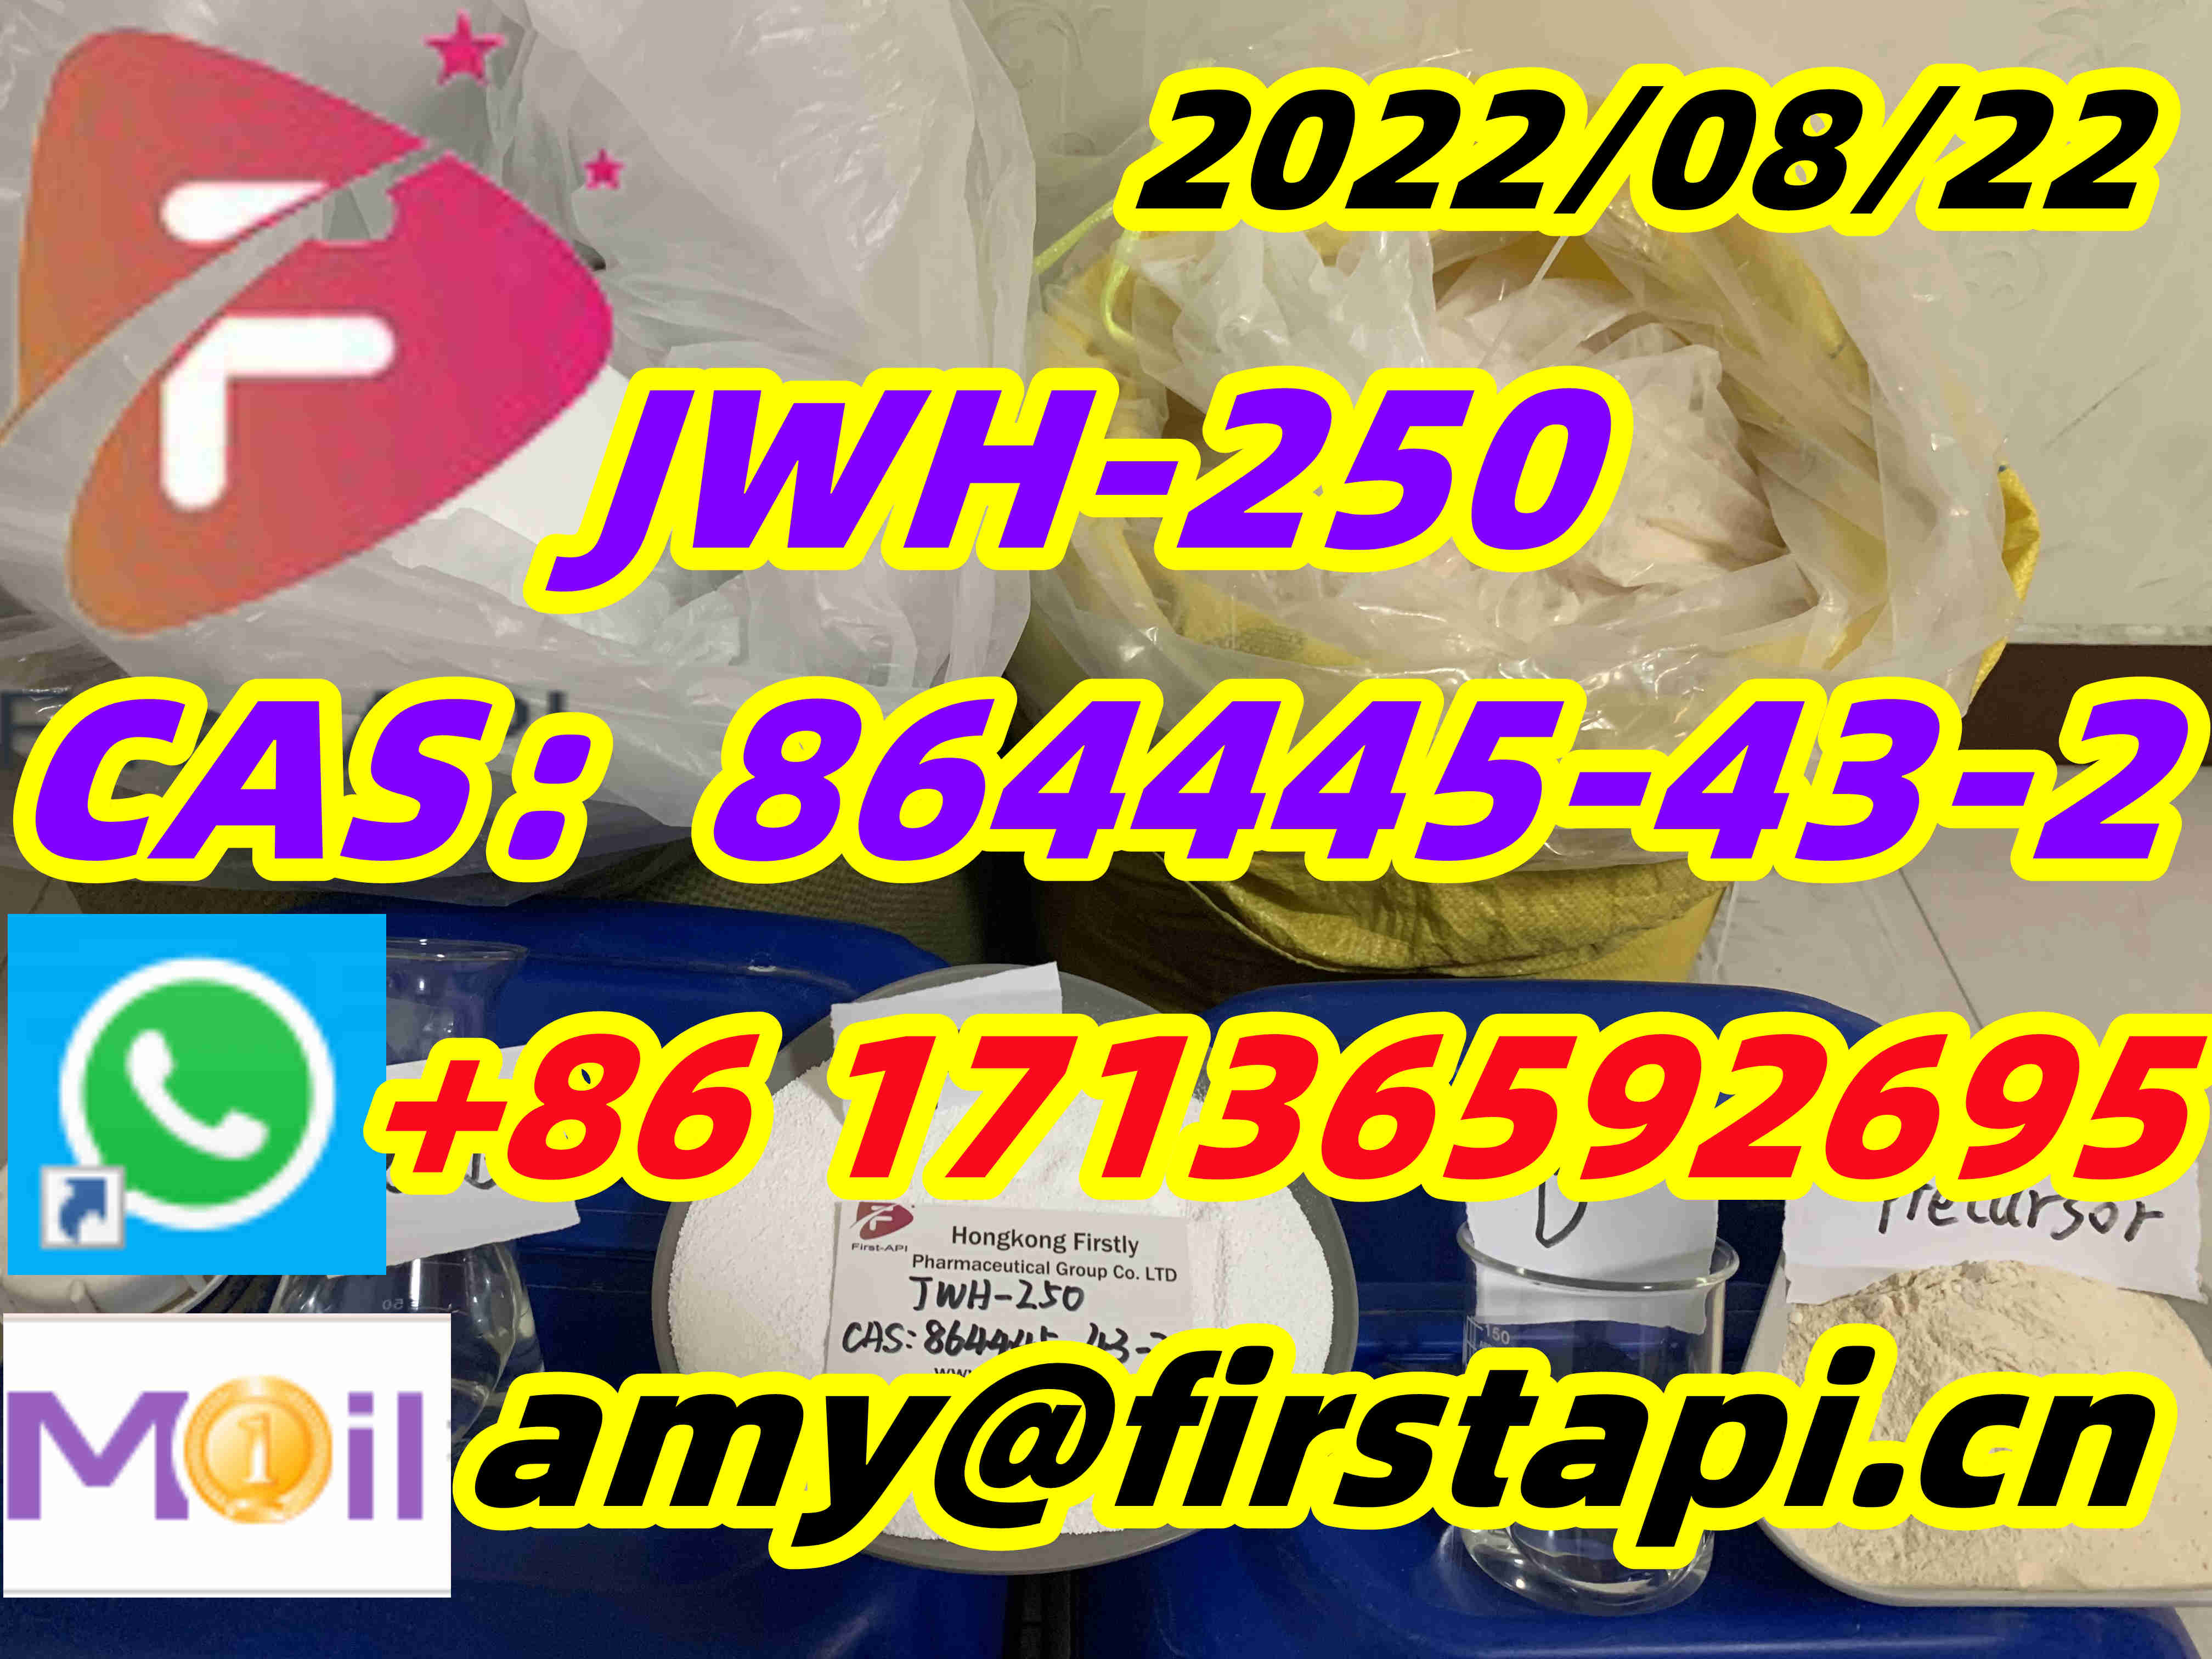 CAS:864445-43-2,high quality,low price,JWH-250,Potassium carbonate - photo